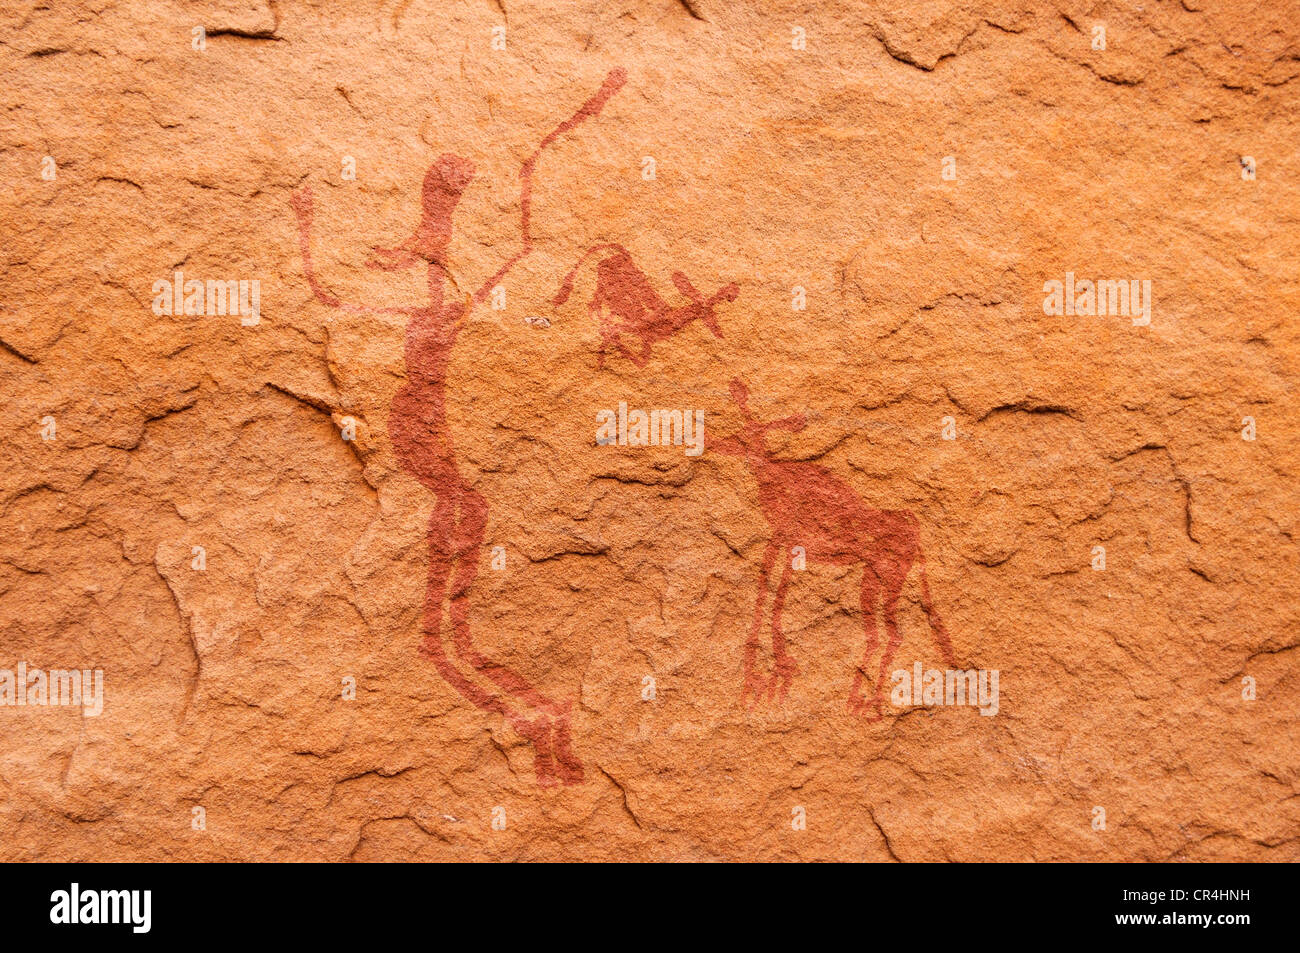 Human with animals, neolithic rock art of the Tadrart, Tassili n'Ajjer National Park, Unesco World Heritage Site, Algeria Stock Photo